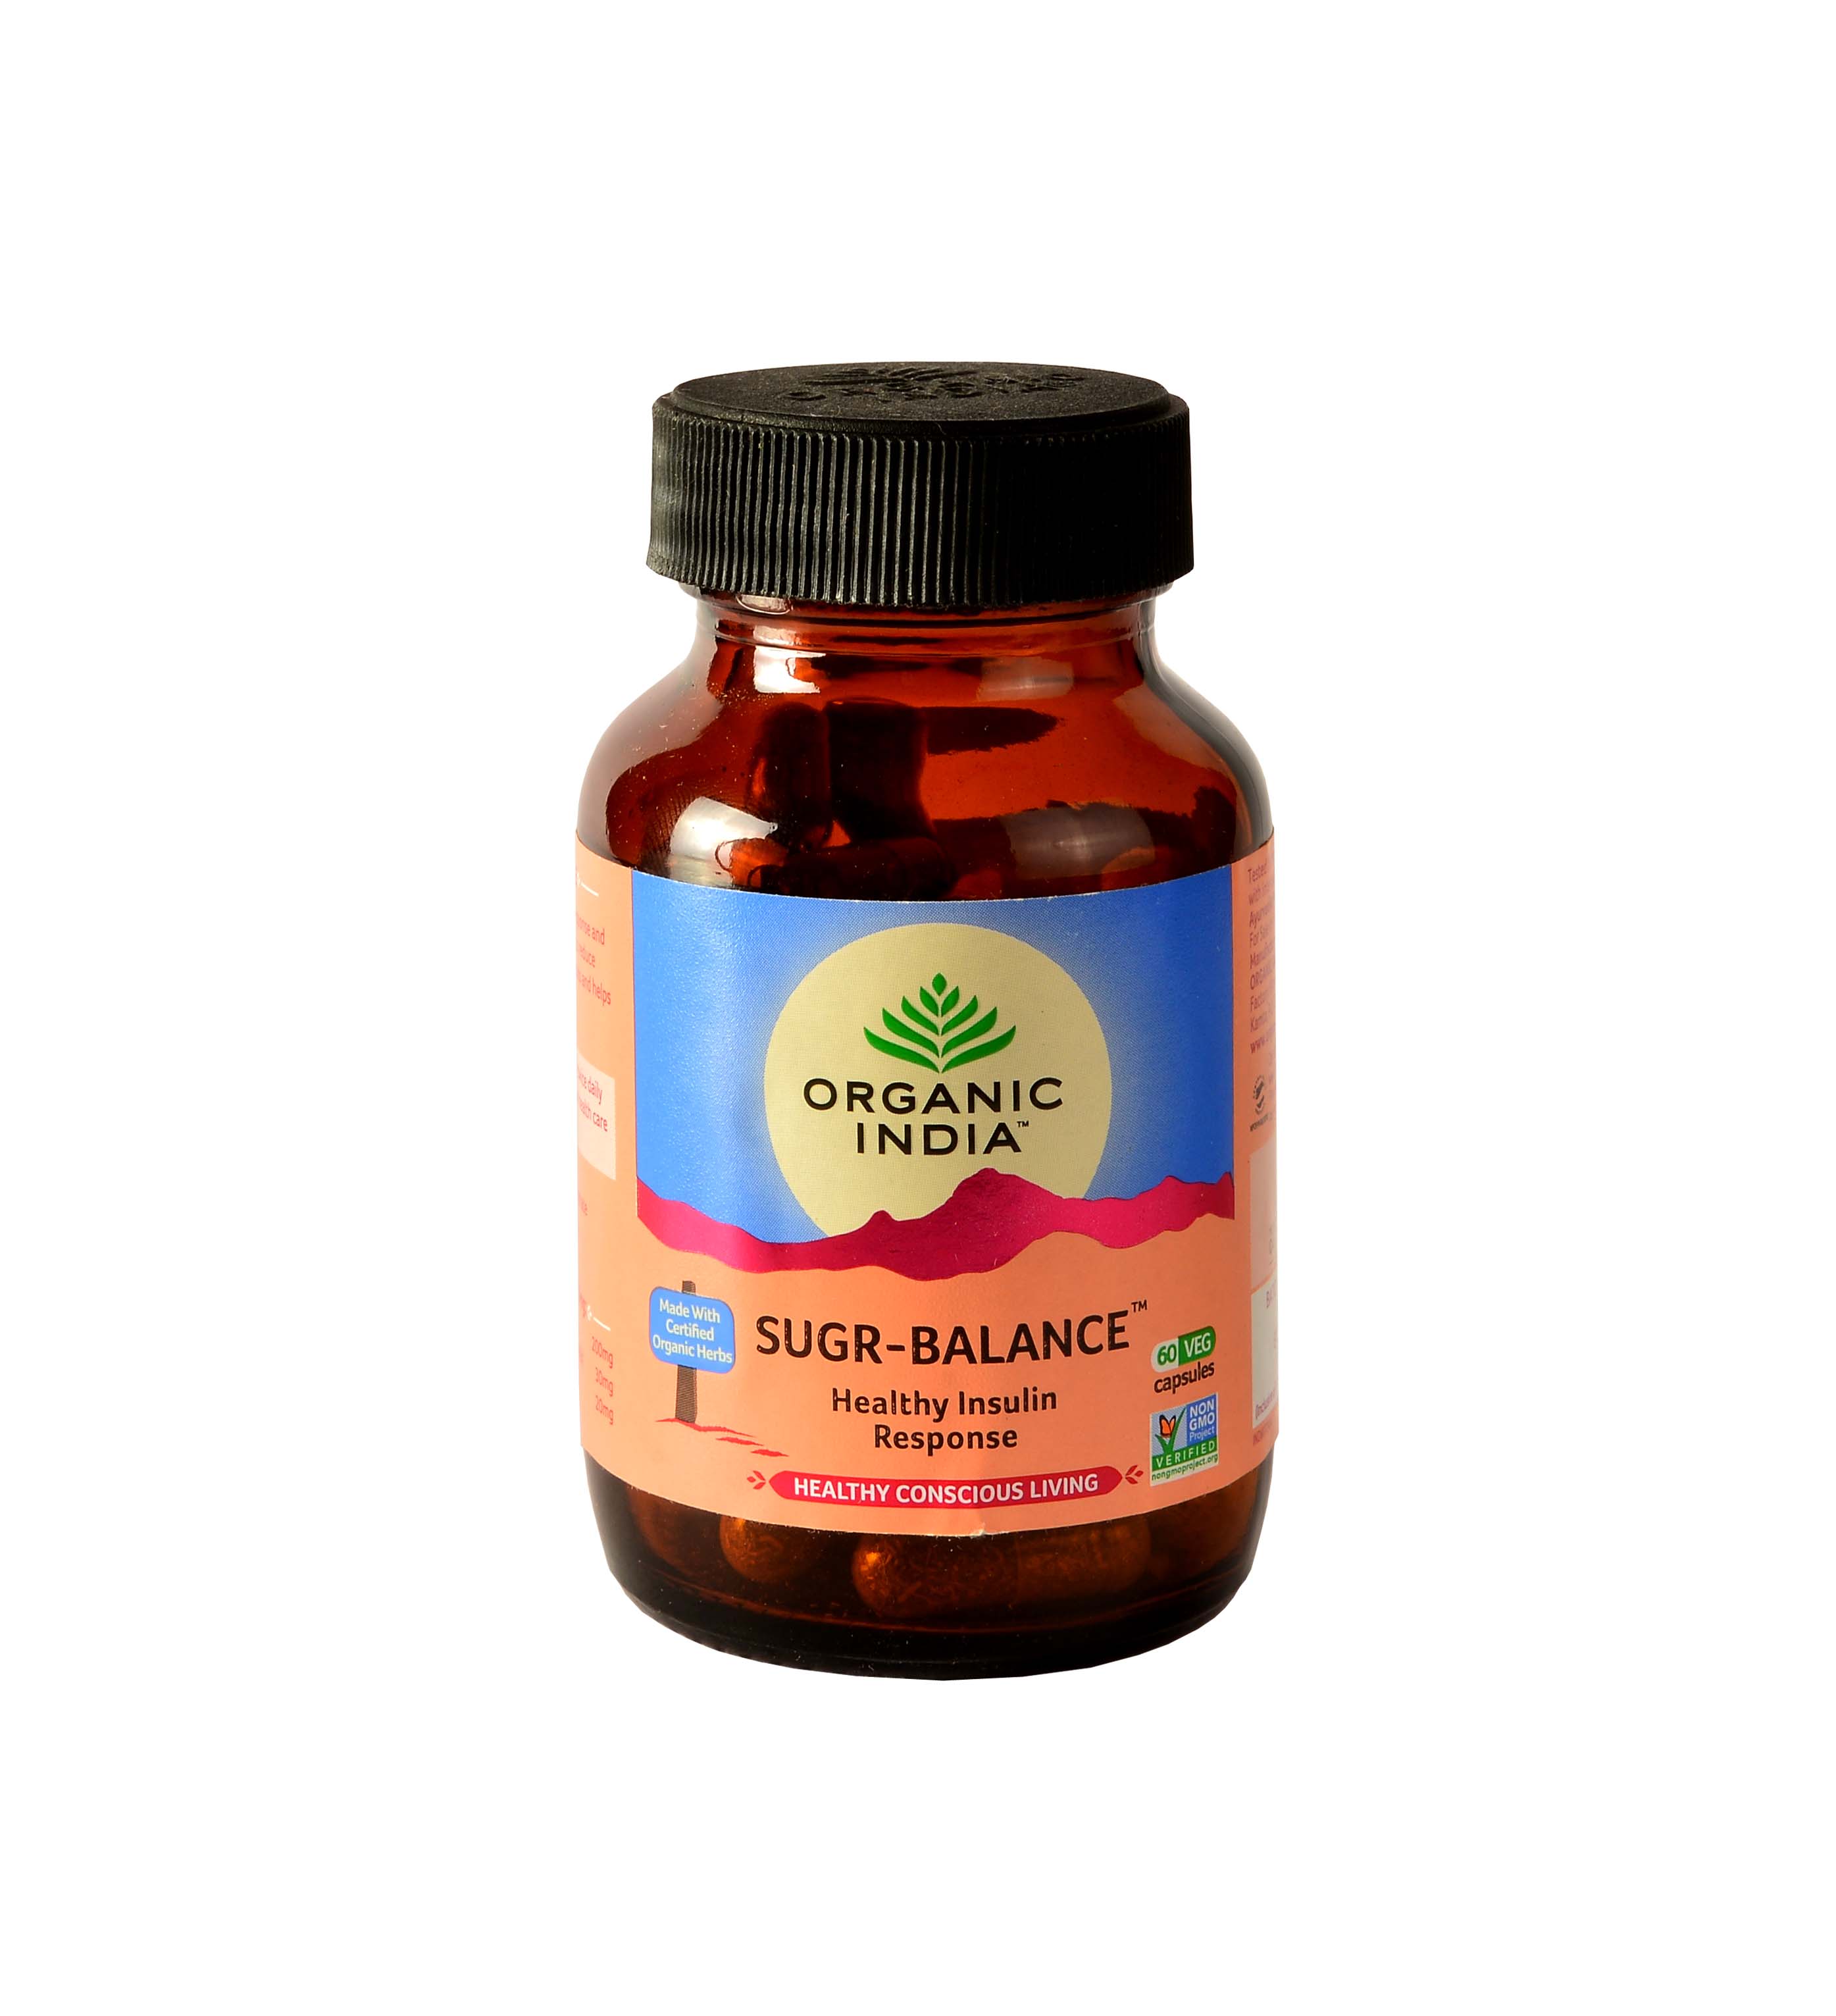 Buy Organic India Sugr Balance Capsule at Best Price Online